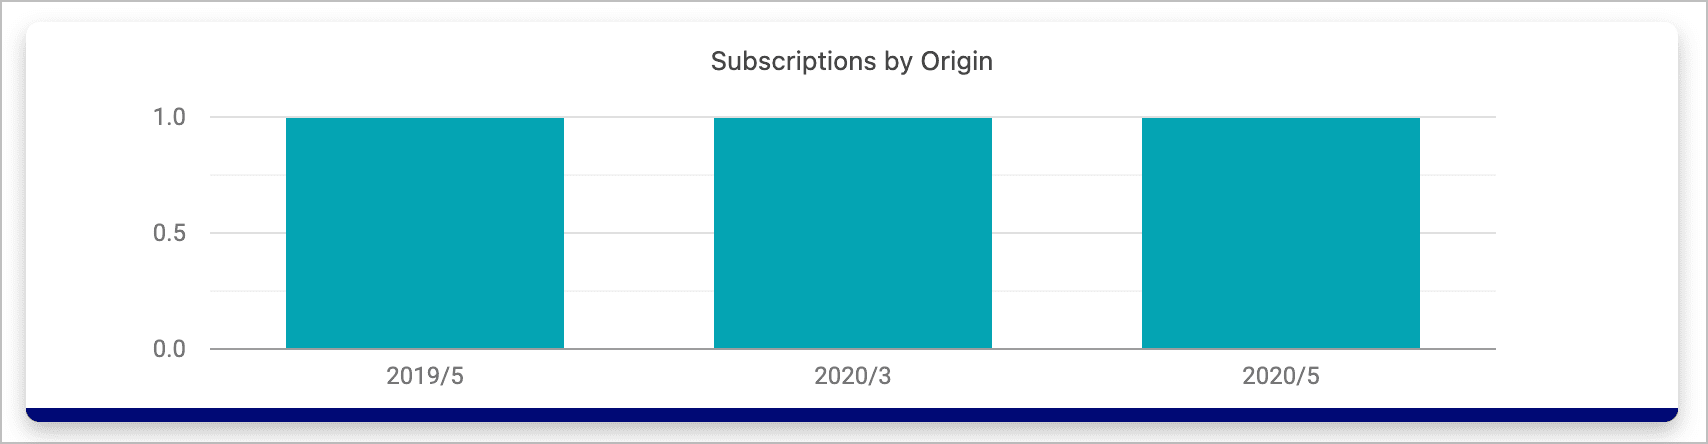 Screenshot of subscriptions by origin